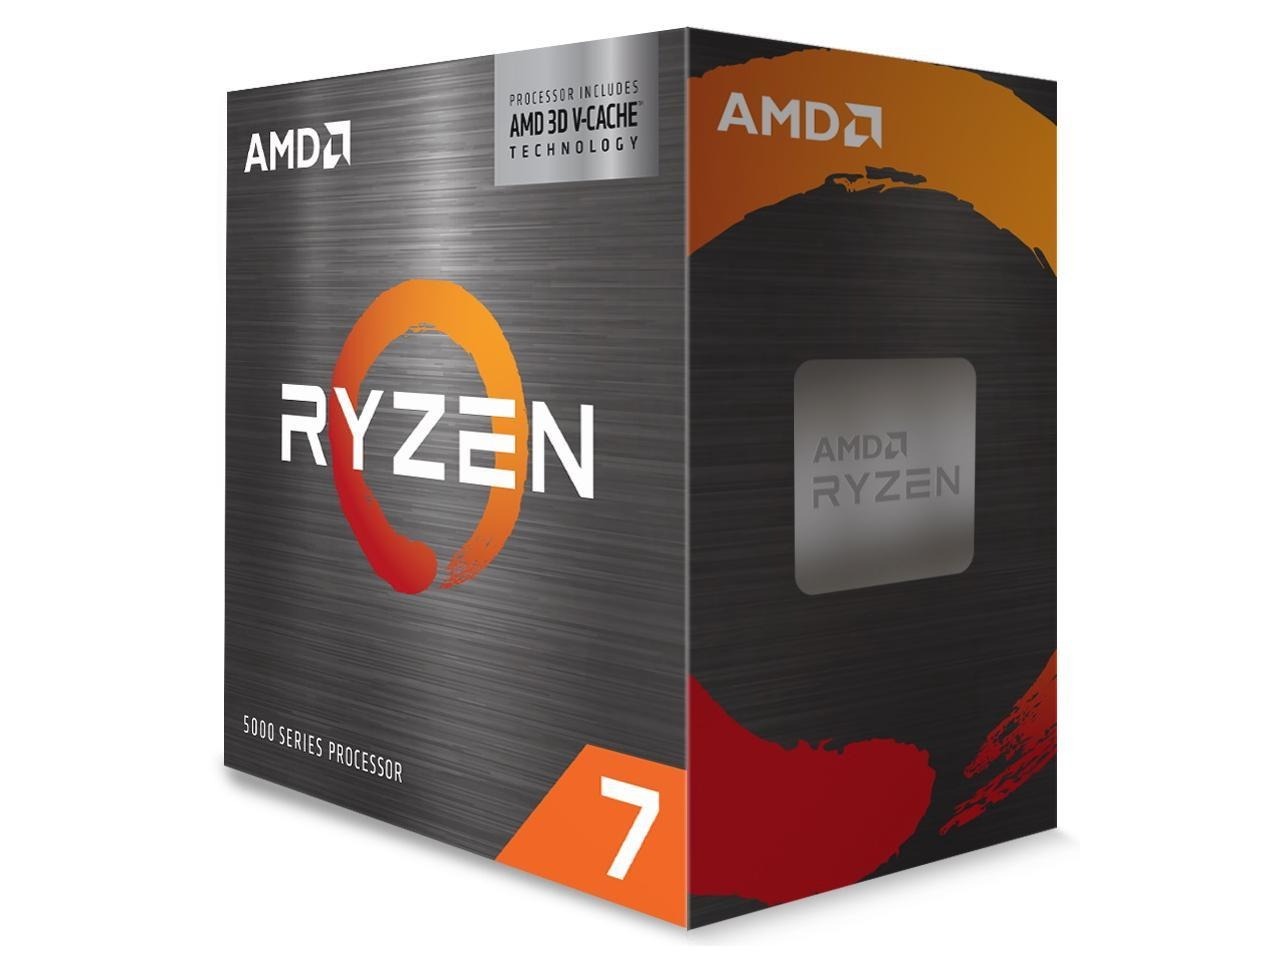 AMD Ryzen 7 5800X3D + MSI B450M-A PRO MAX II AM4 AMD motherboard $319 + Free Shipping